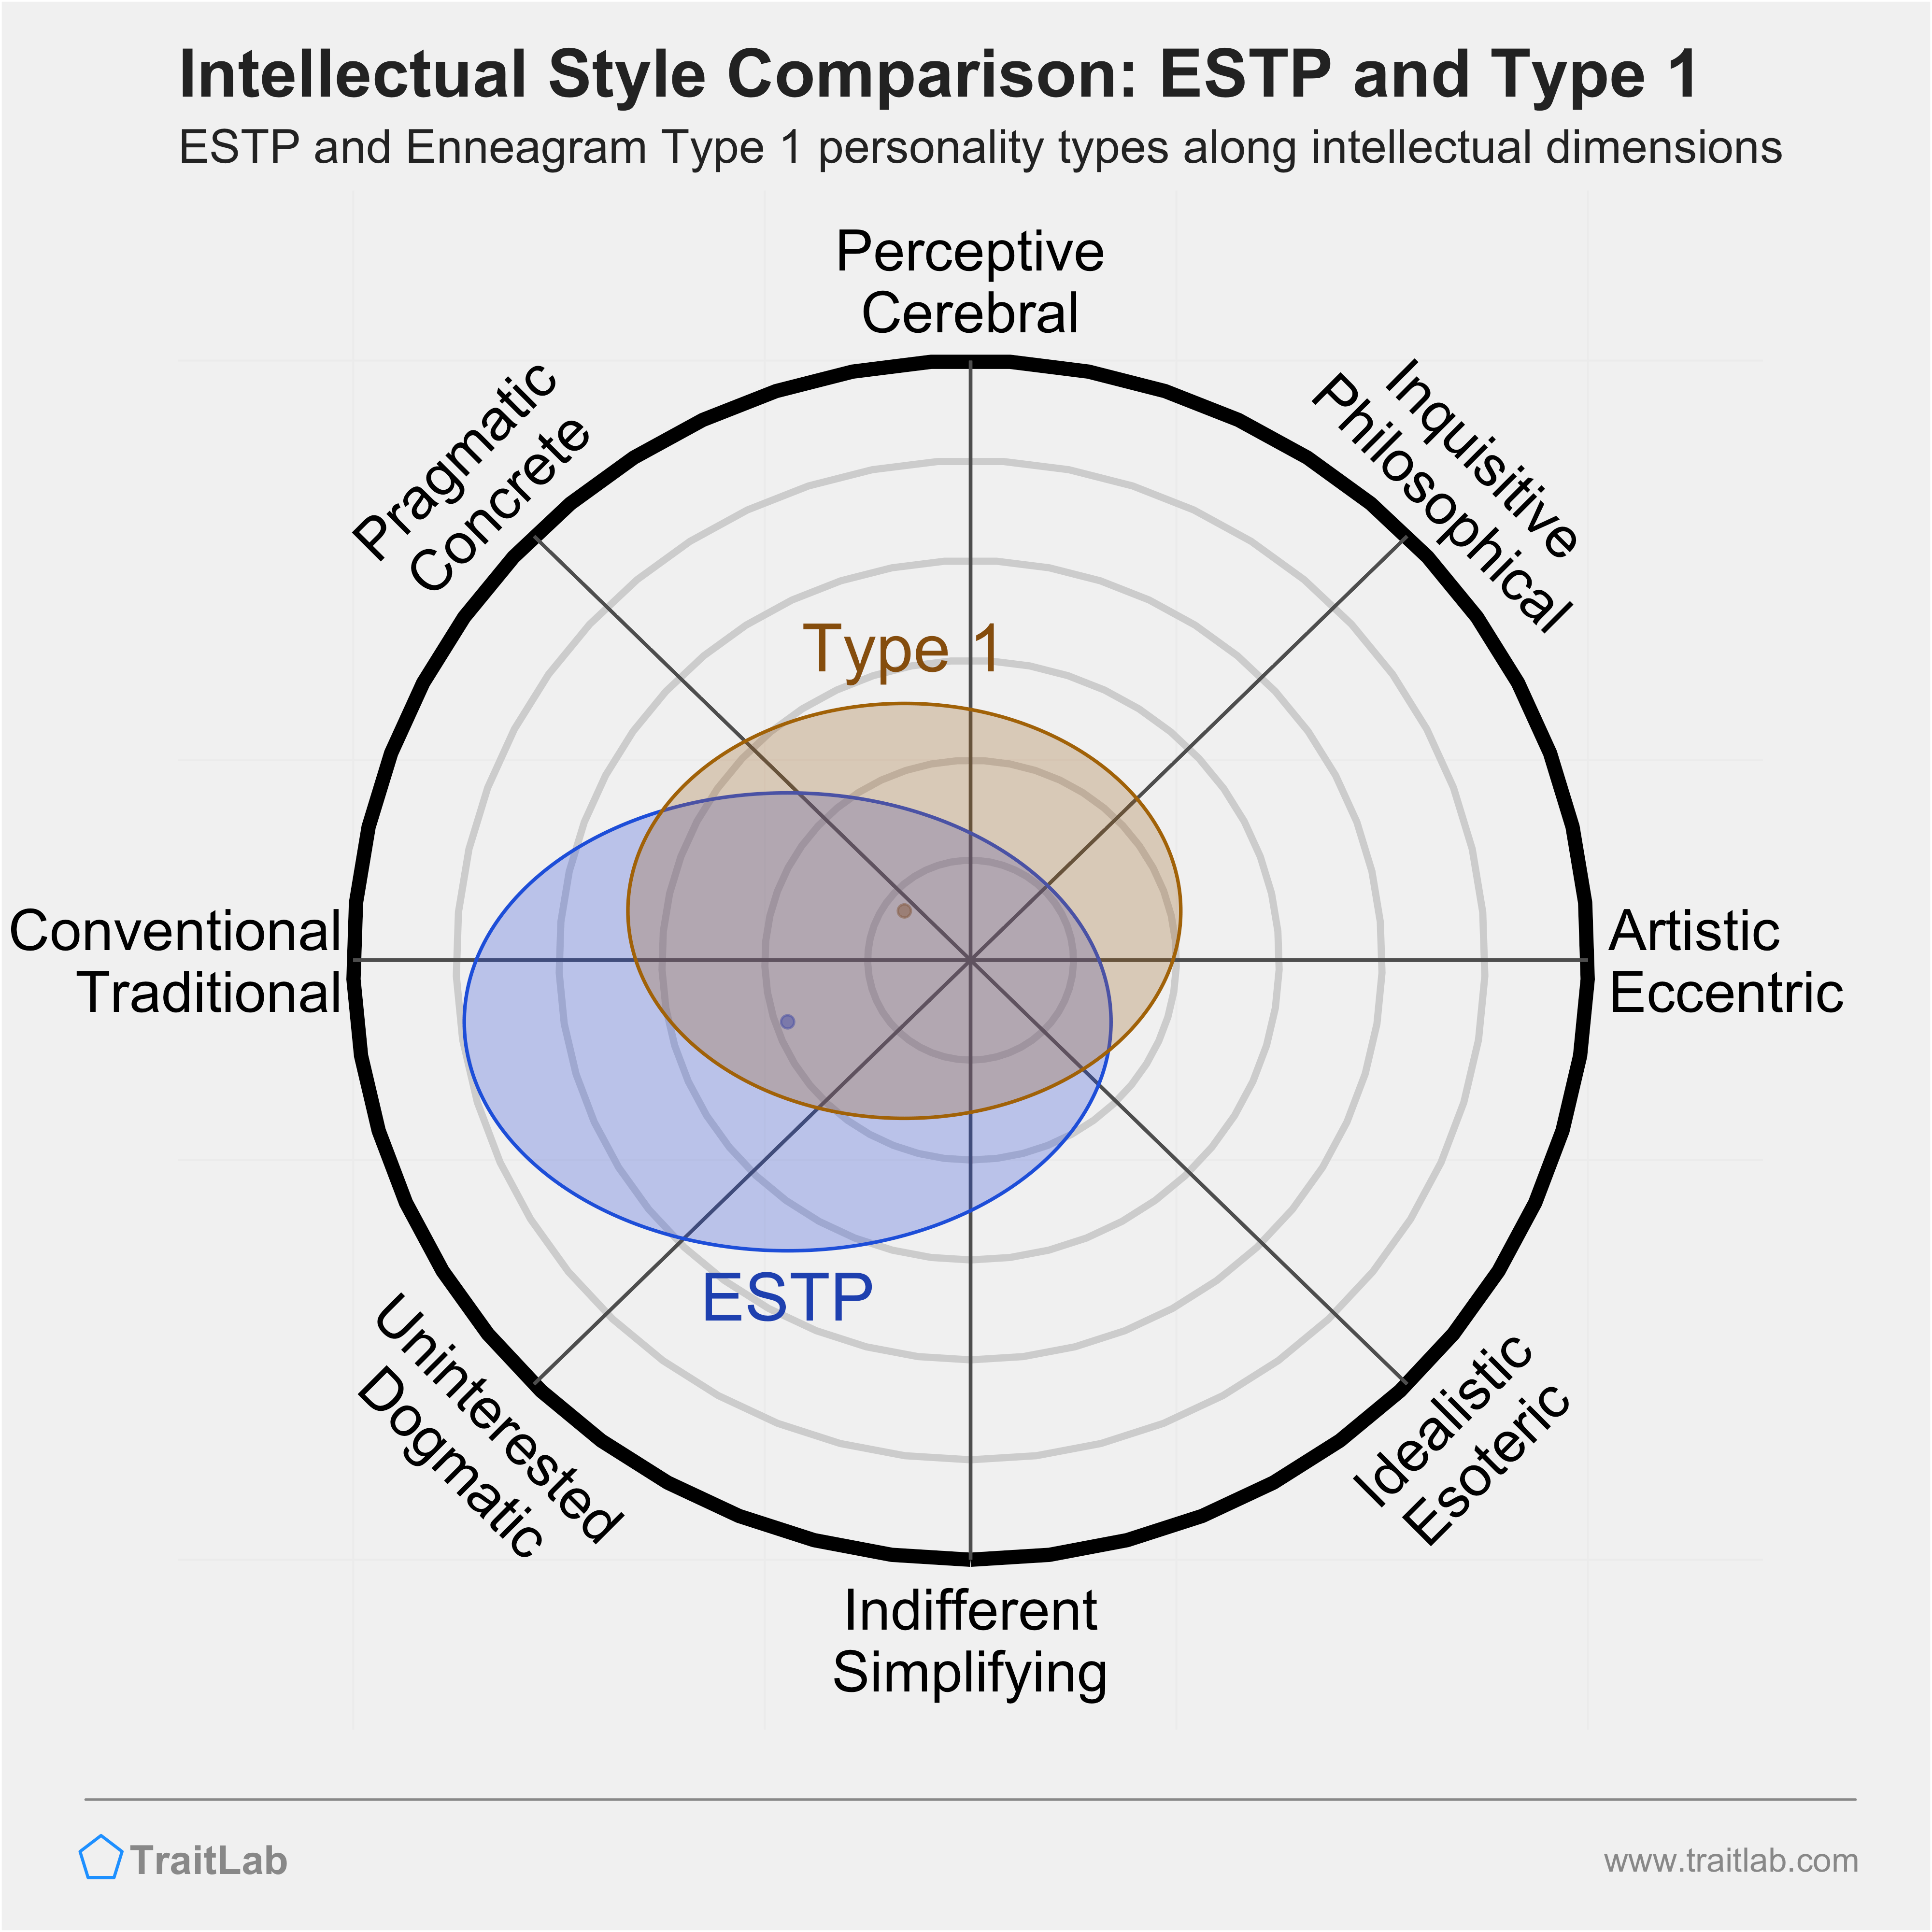 ESTP and Type 1 comparison across intellectual dimensions